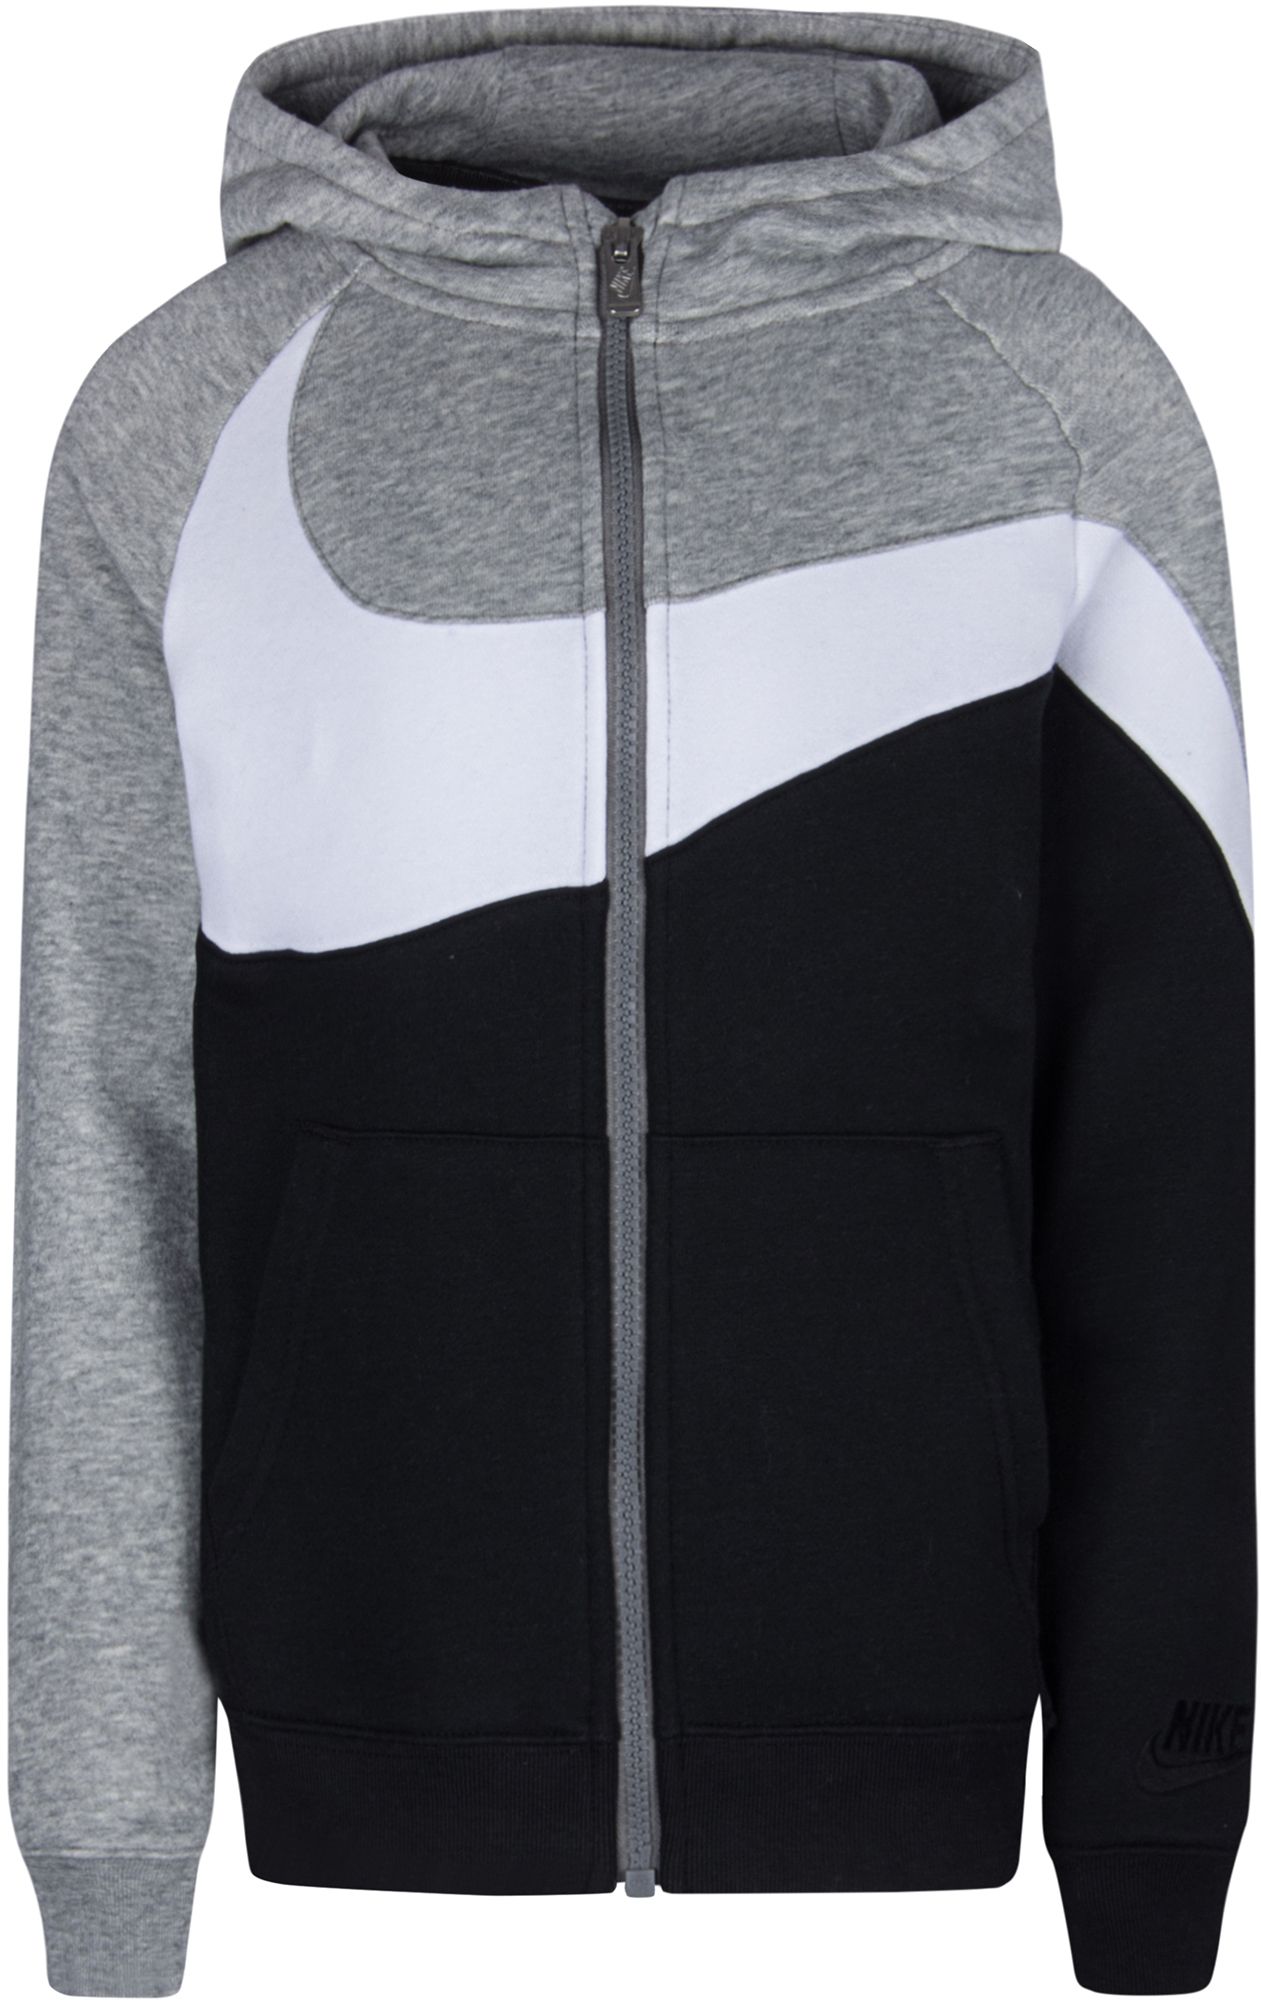 black grey and white nike sweatshirt